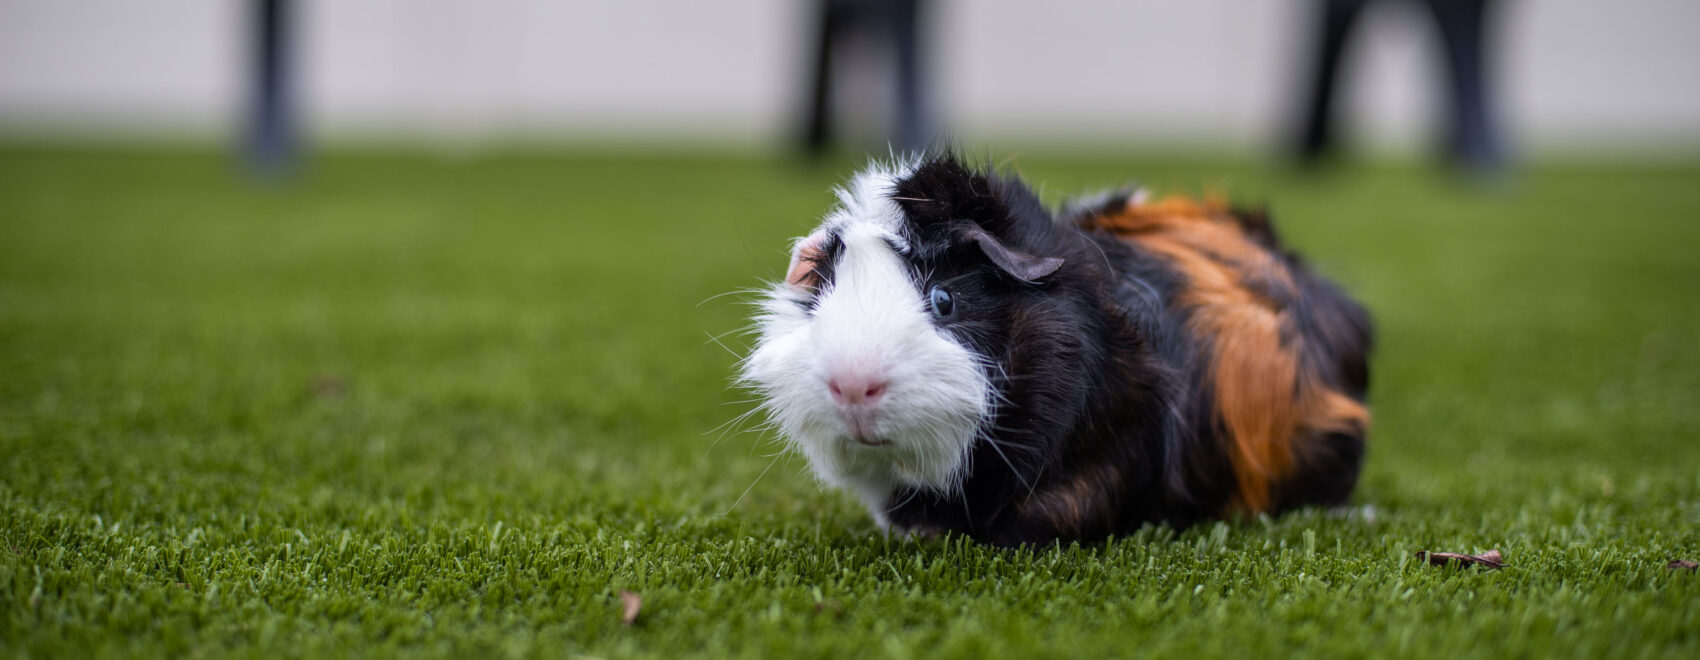 Guinea Pig on the Grass